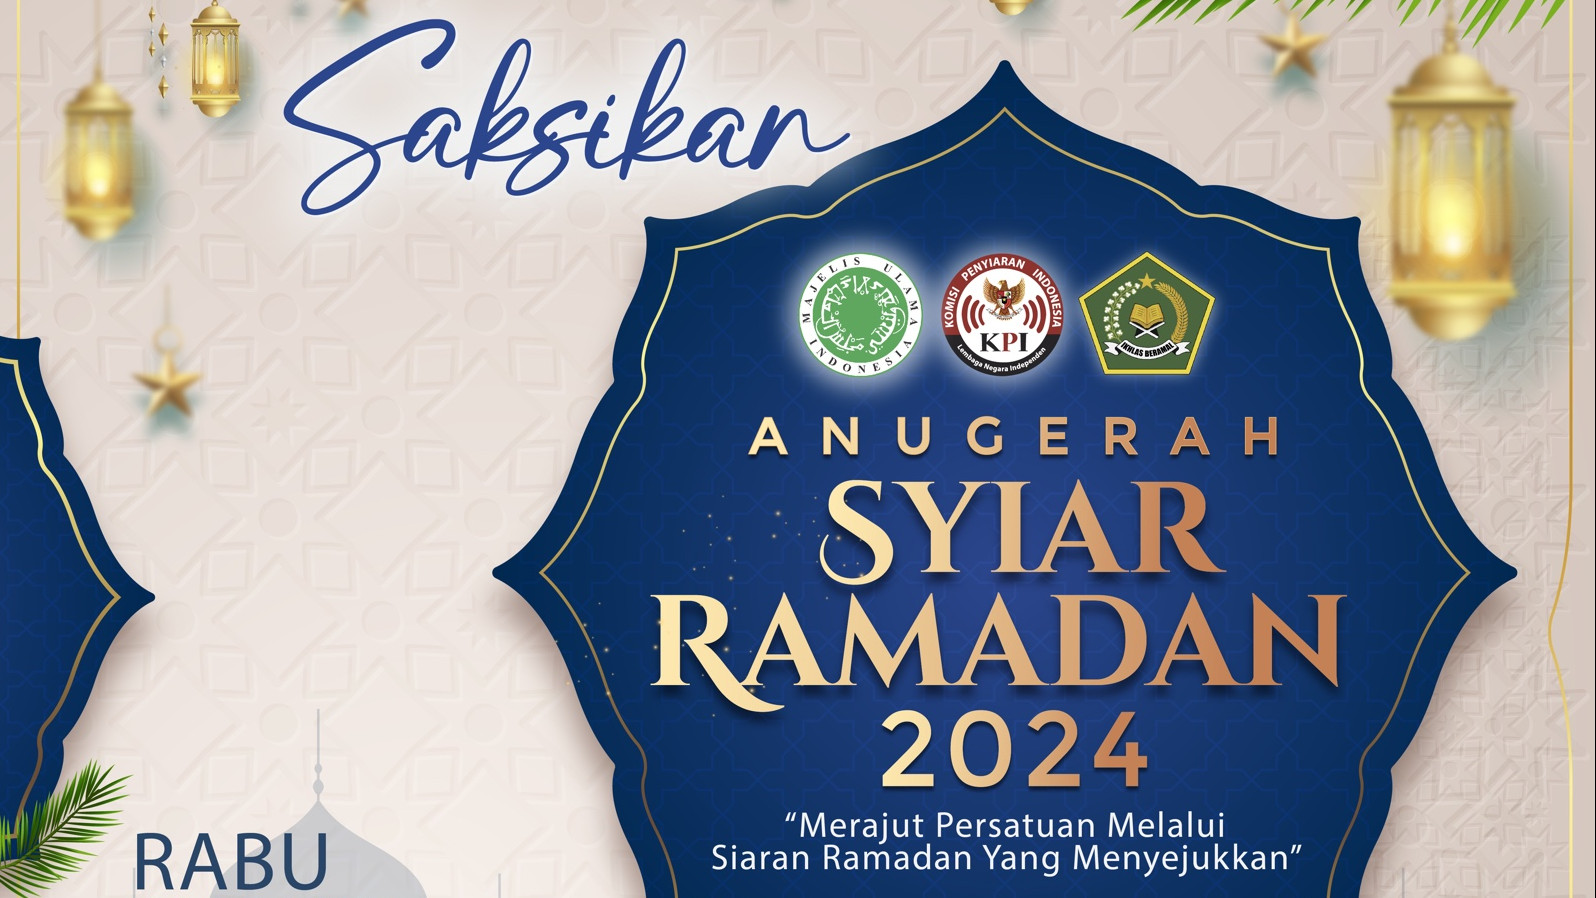 Kemenag, KPI, dan MUI Gelar Anugerah Syiar Ramadan 2024 Apresiasi Siaran TV & Radio